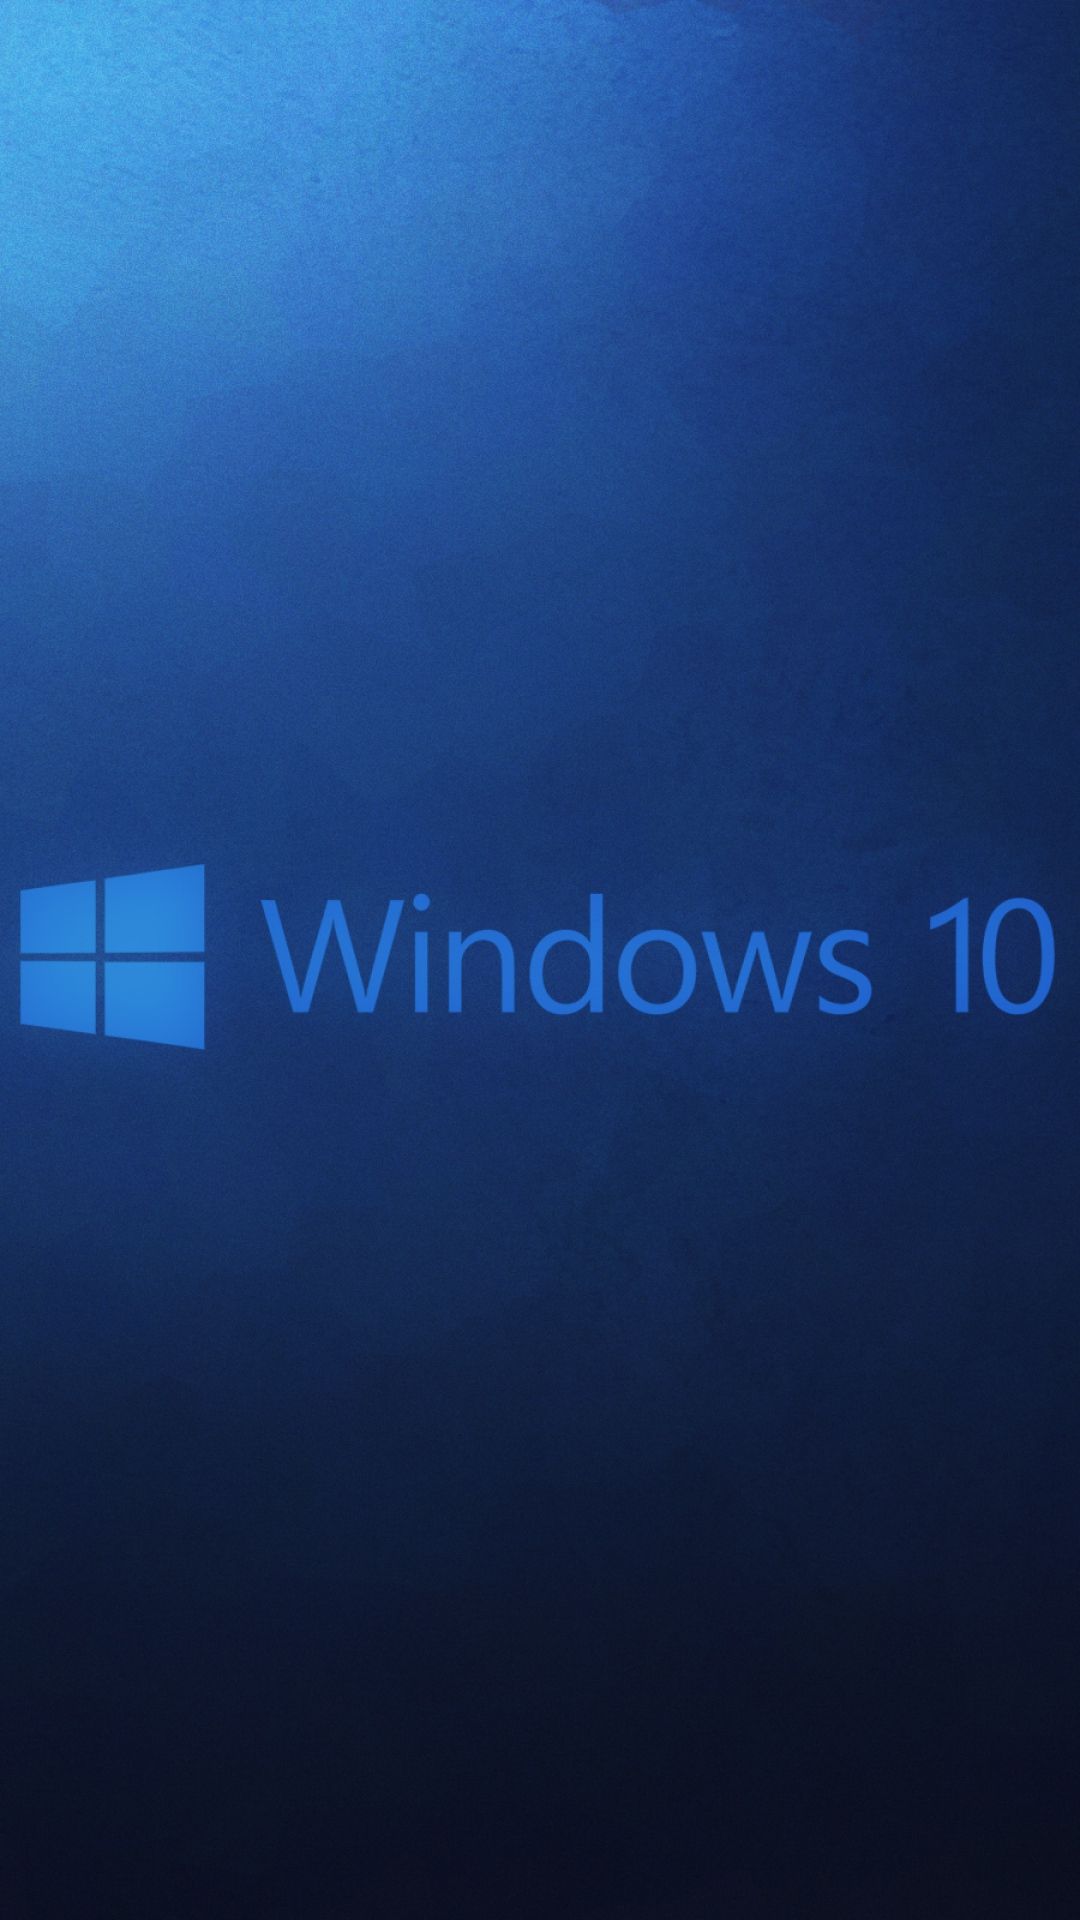 Free download HD Background Windows 10 Wallpaper Microsoft